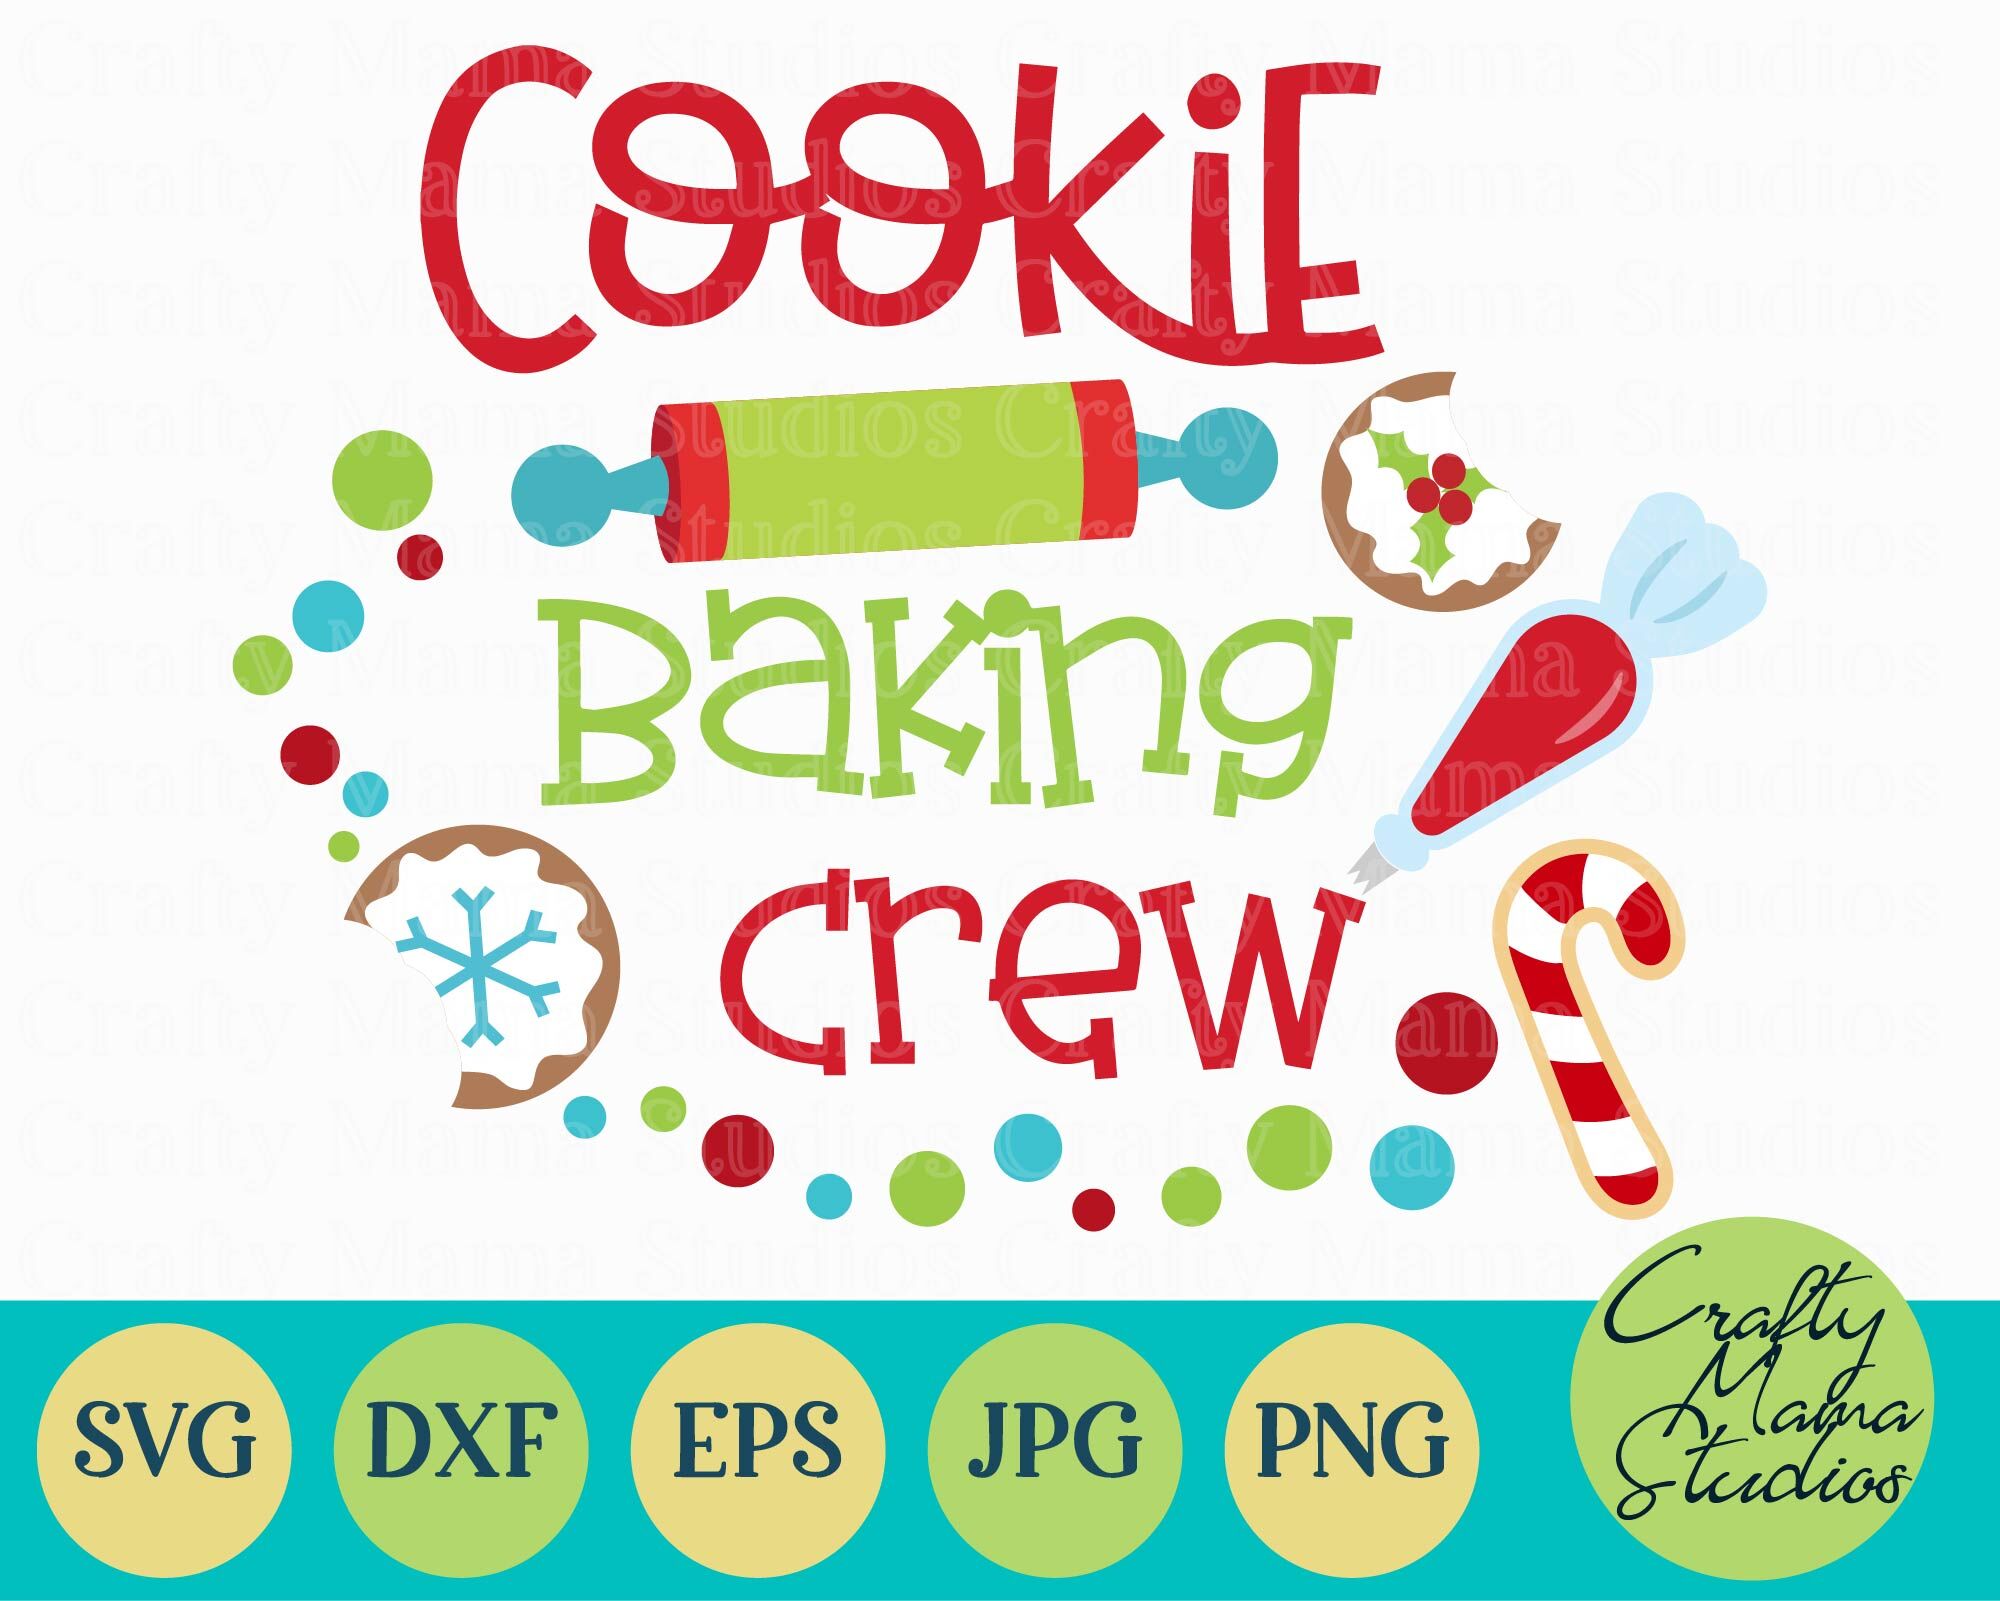 Christmas Svg Cookie Baking Crew Christmas Cookies Baking By Crafty Mama Studios Thehungryjpeg Com